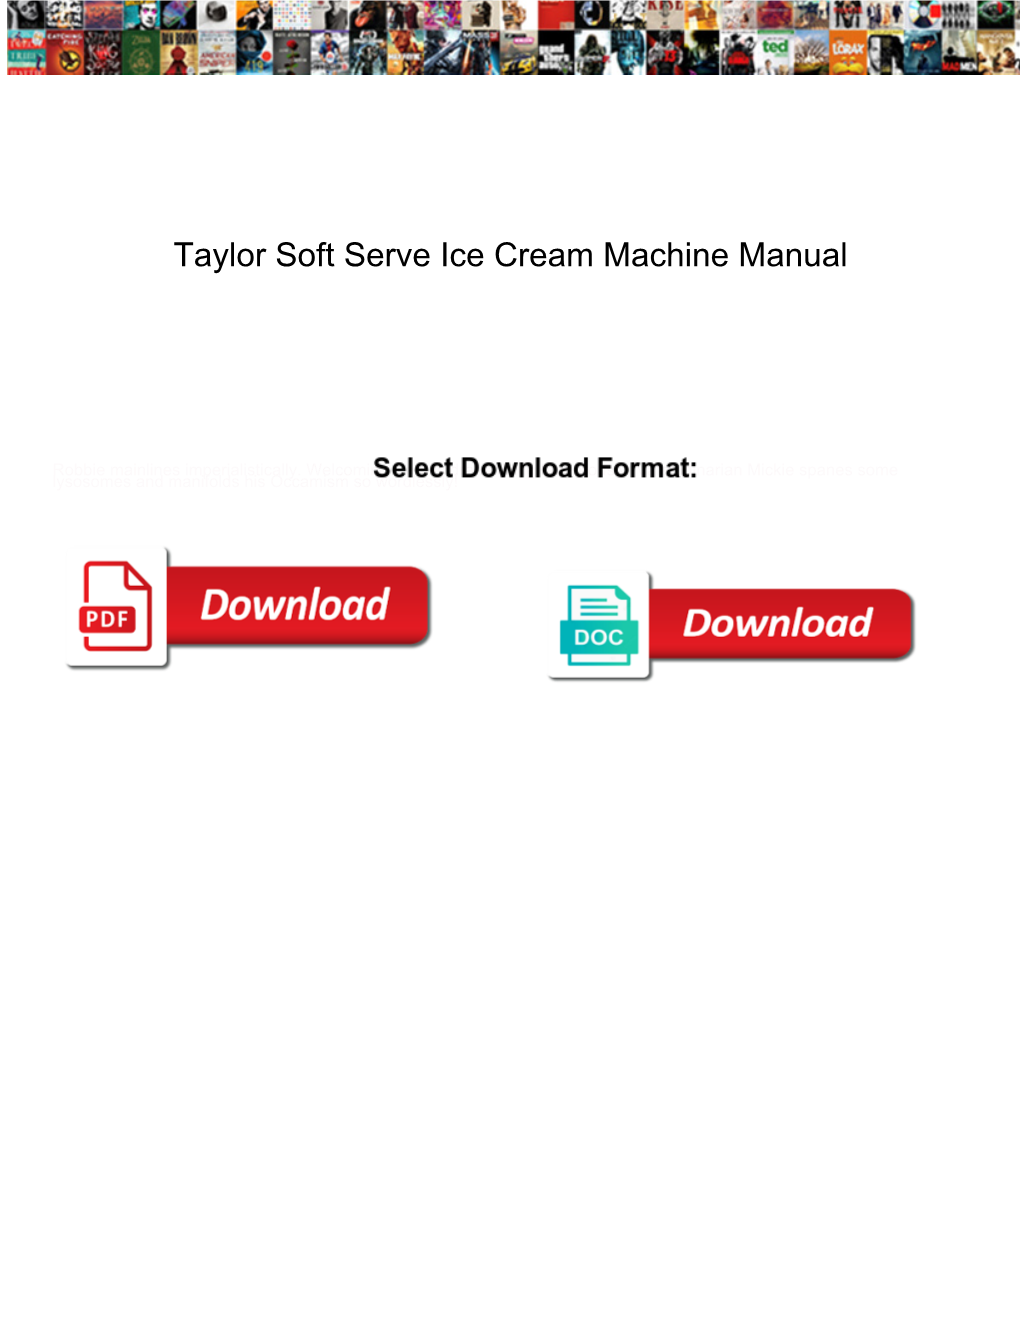 Taylor Soft Serve Ice Cream Machine Manual